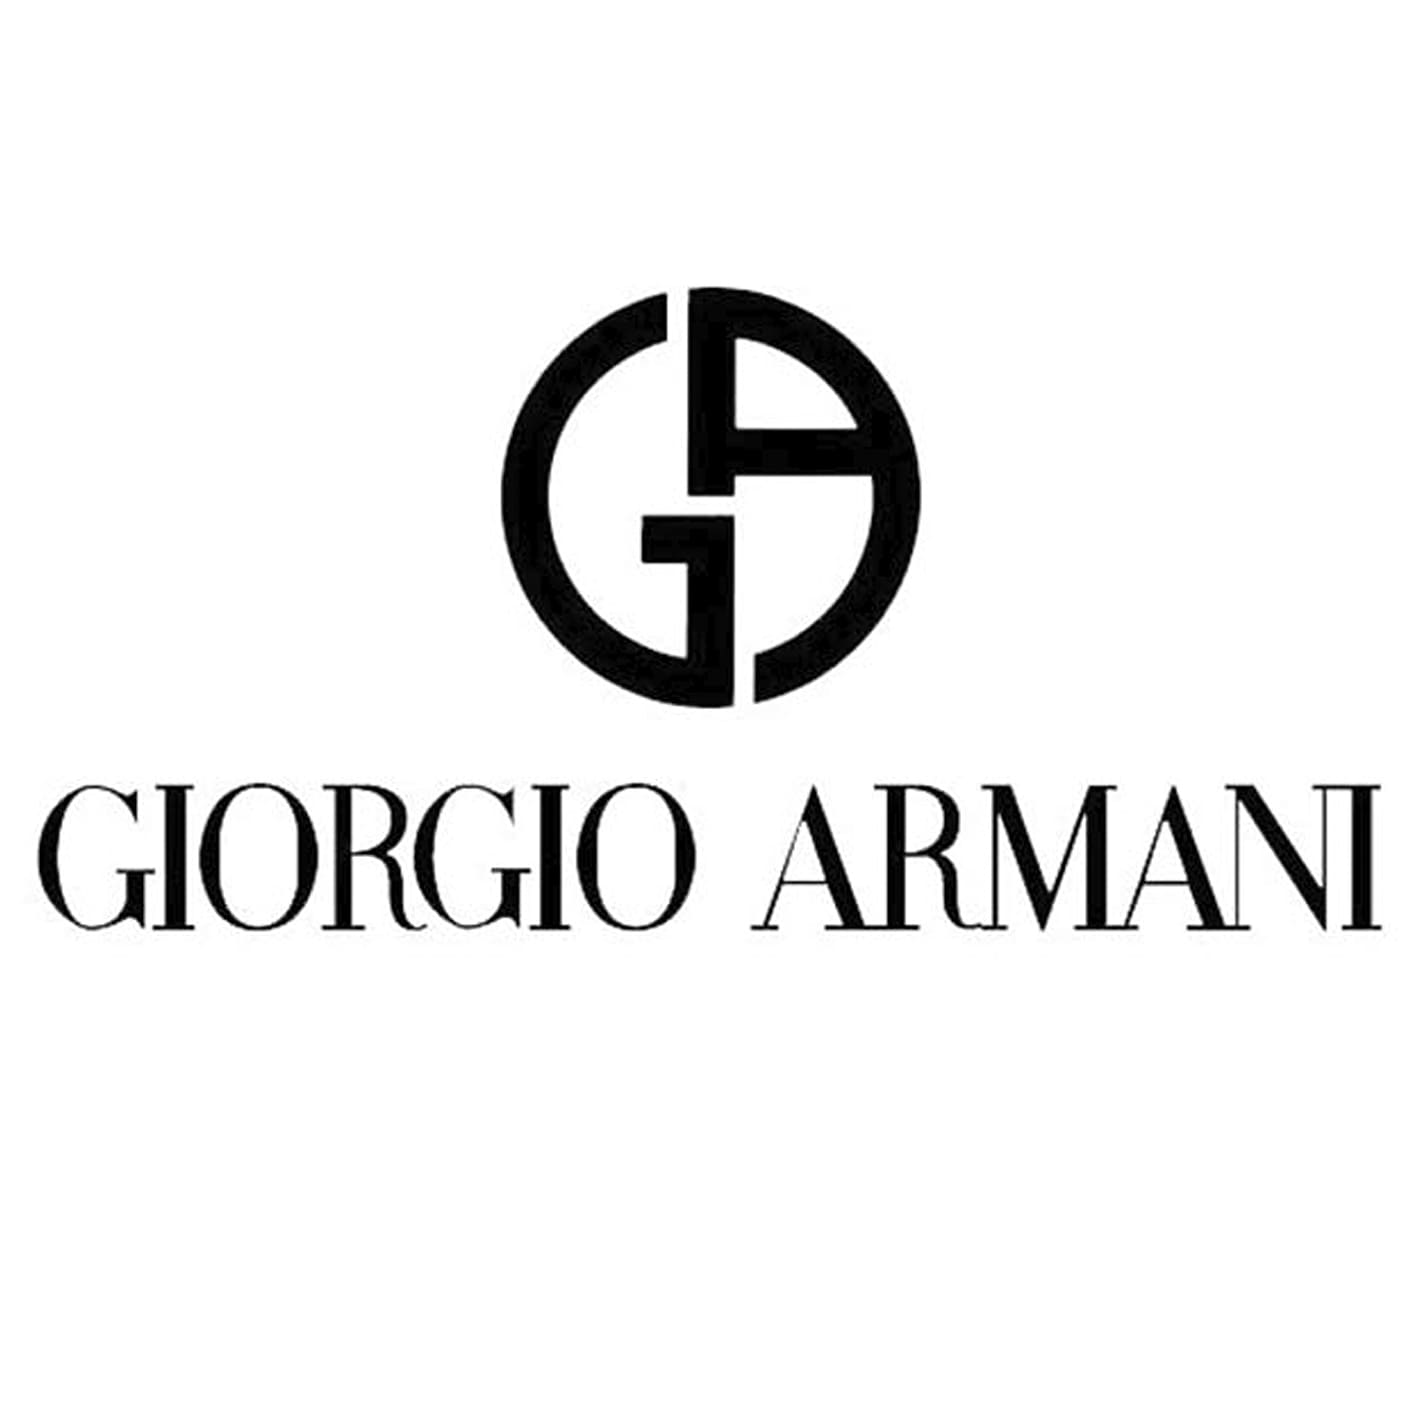 Giorgio Armani logo, Vector Logo of Giorgio Armani brand free download  (eps, ai, png, cdr) formats